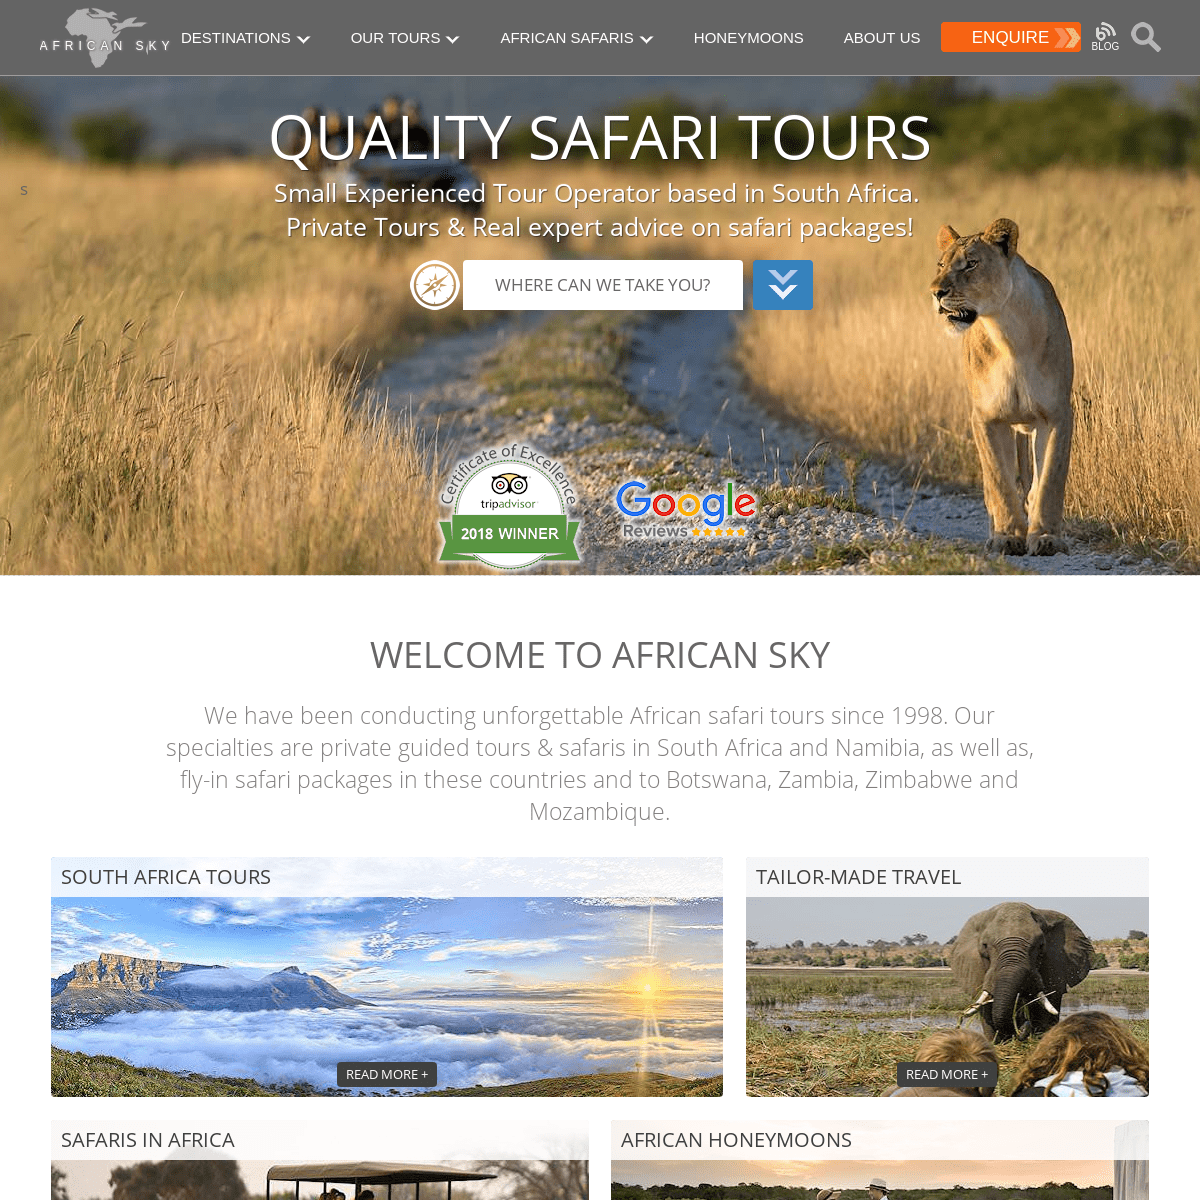 African Safari Tours | South Africa, Namibia, Botswana - African Sky